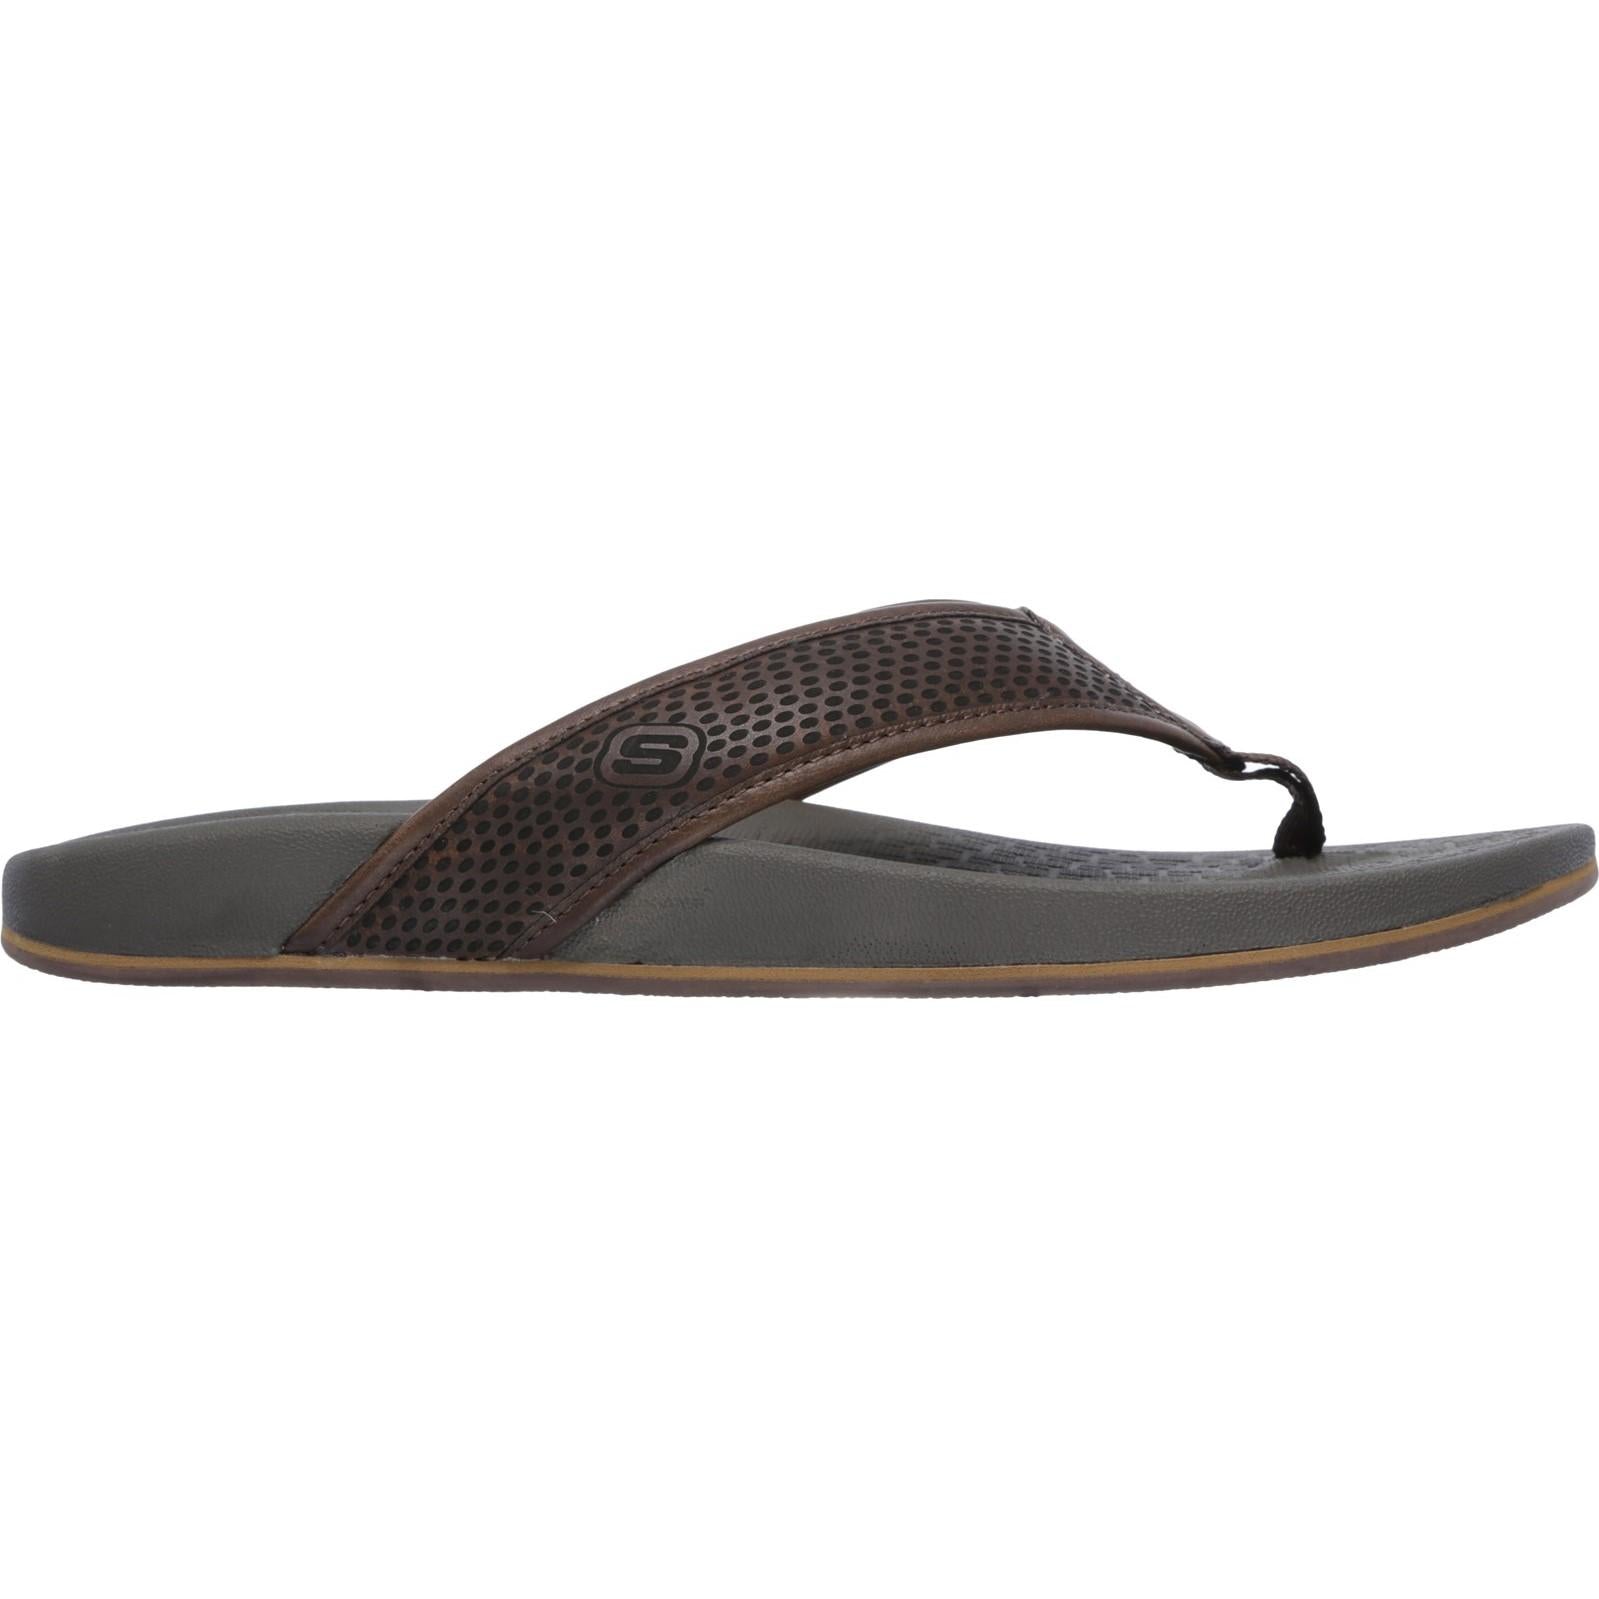 Skechers Pelem Emiro Flip-Flop Sandals